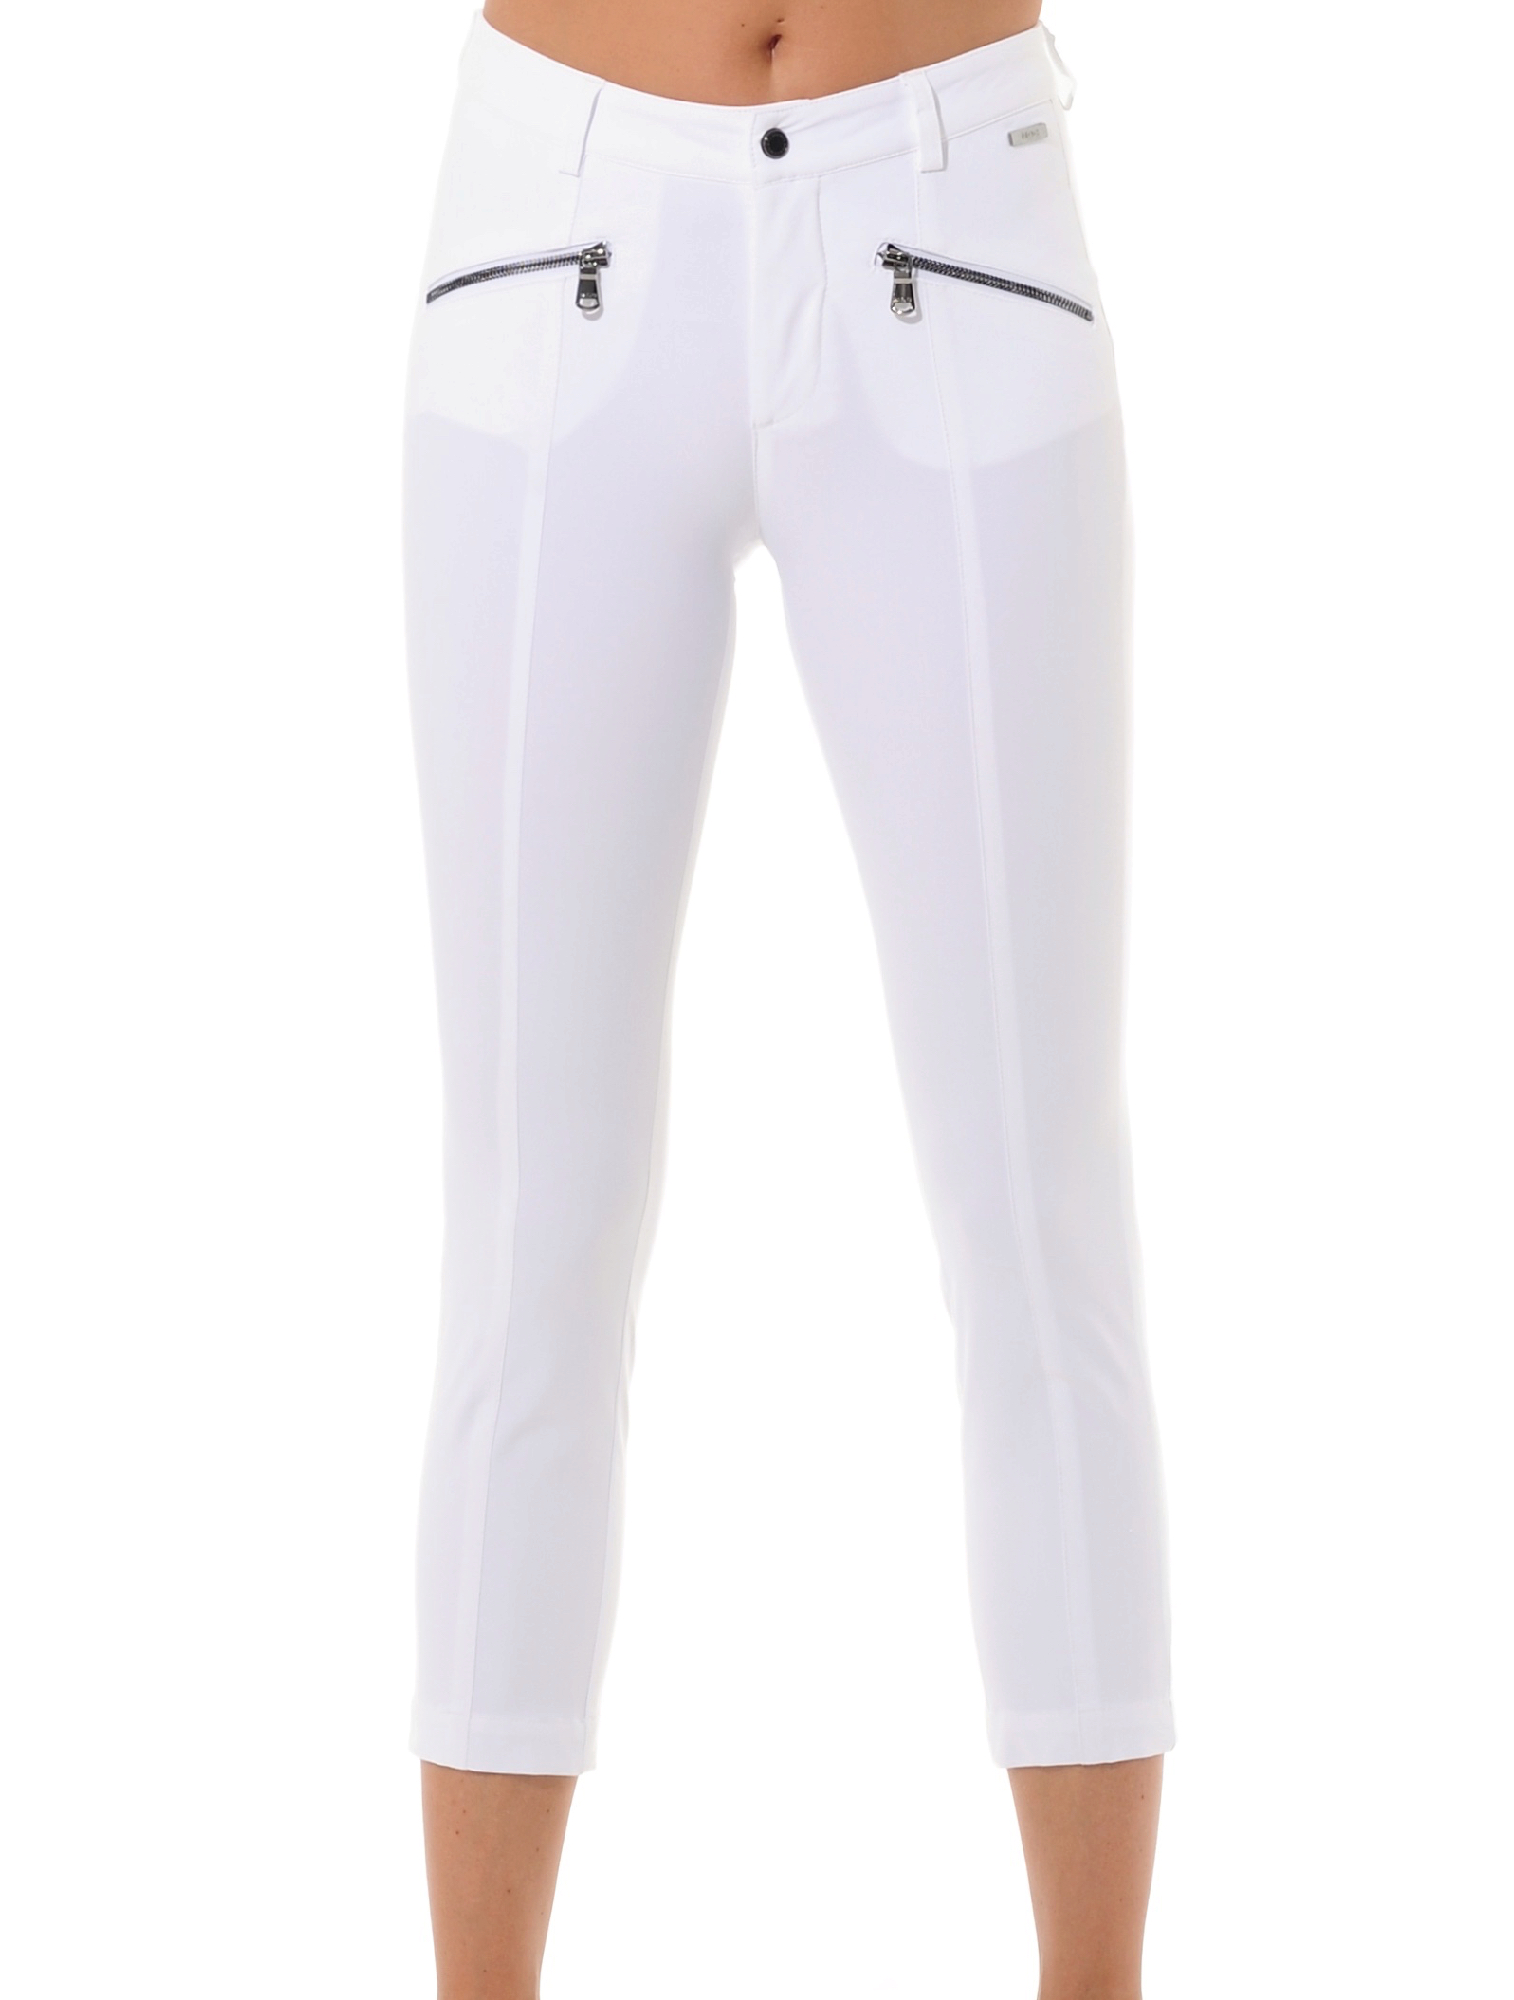 4way stretch curvy cropped pants white 